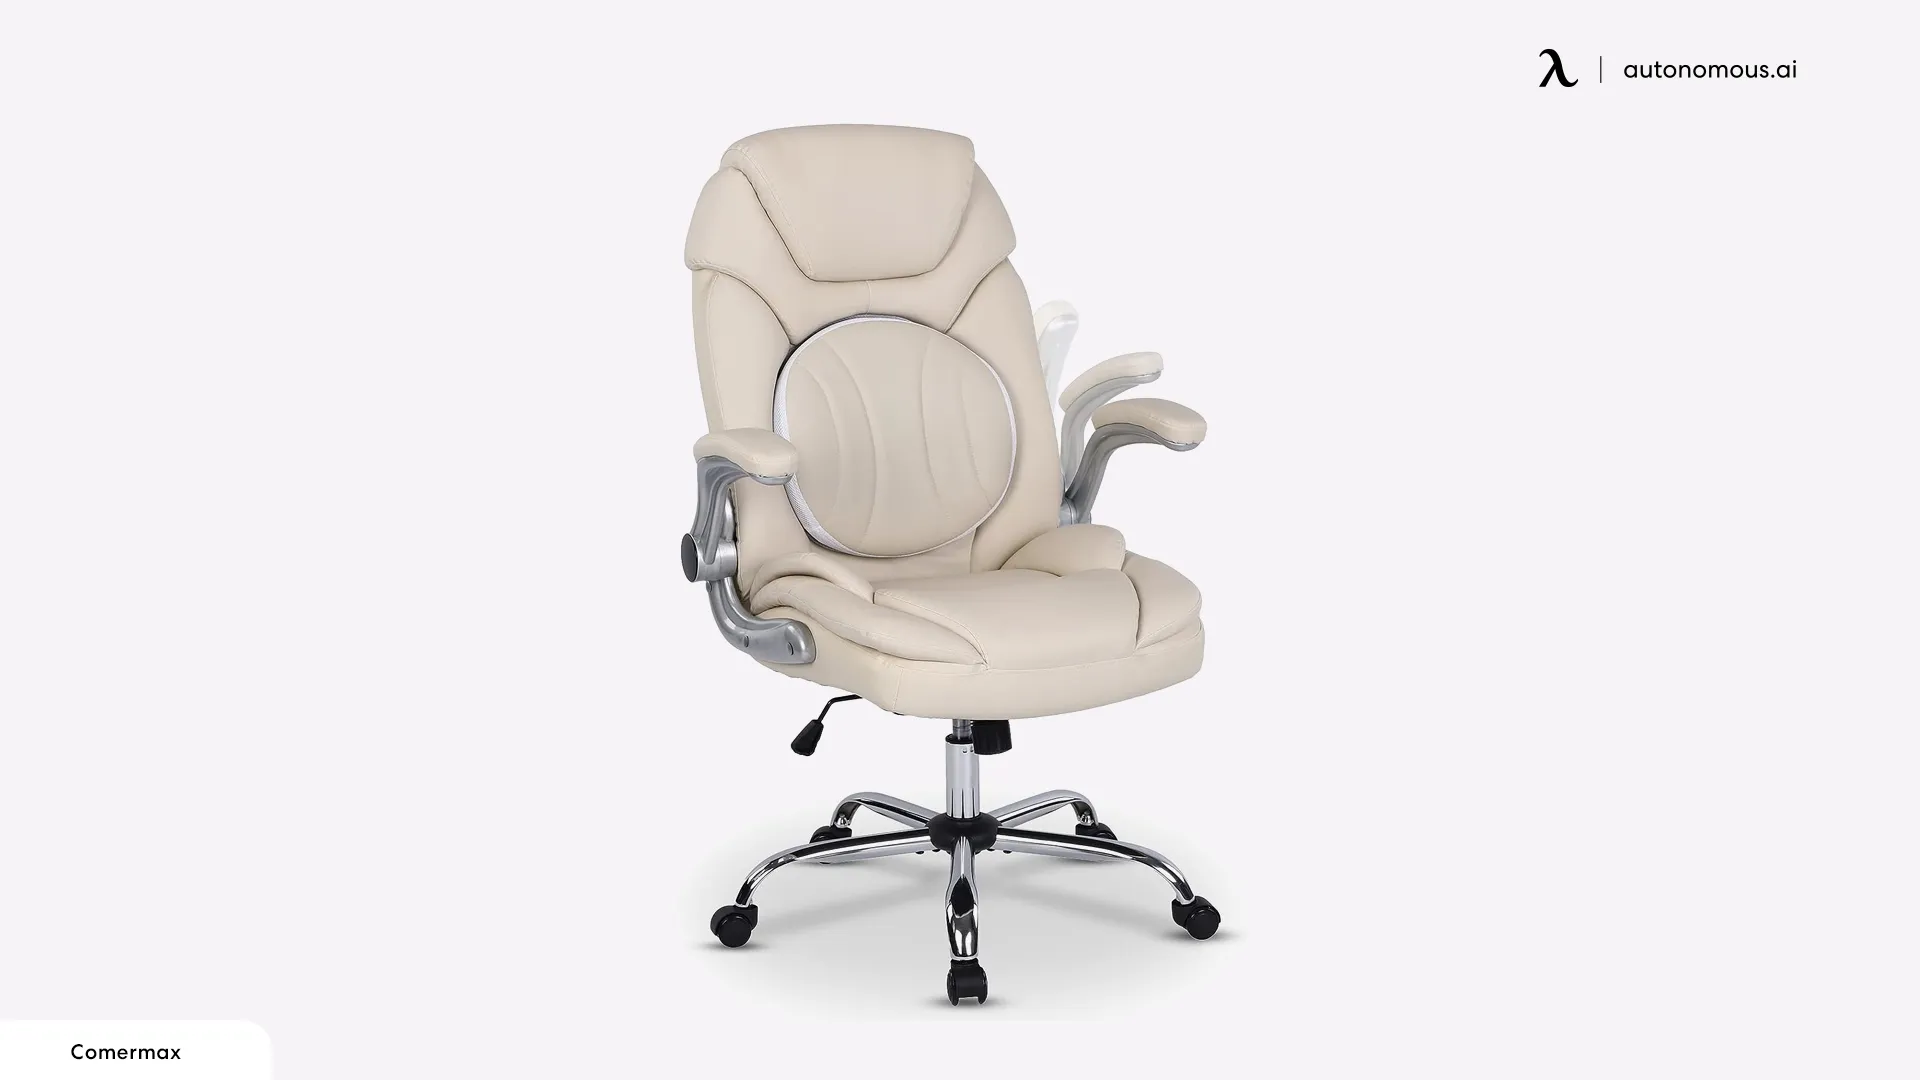 Comermax Modern Executive Office Chair